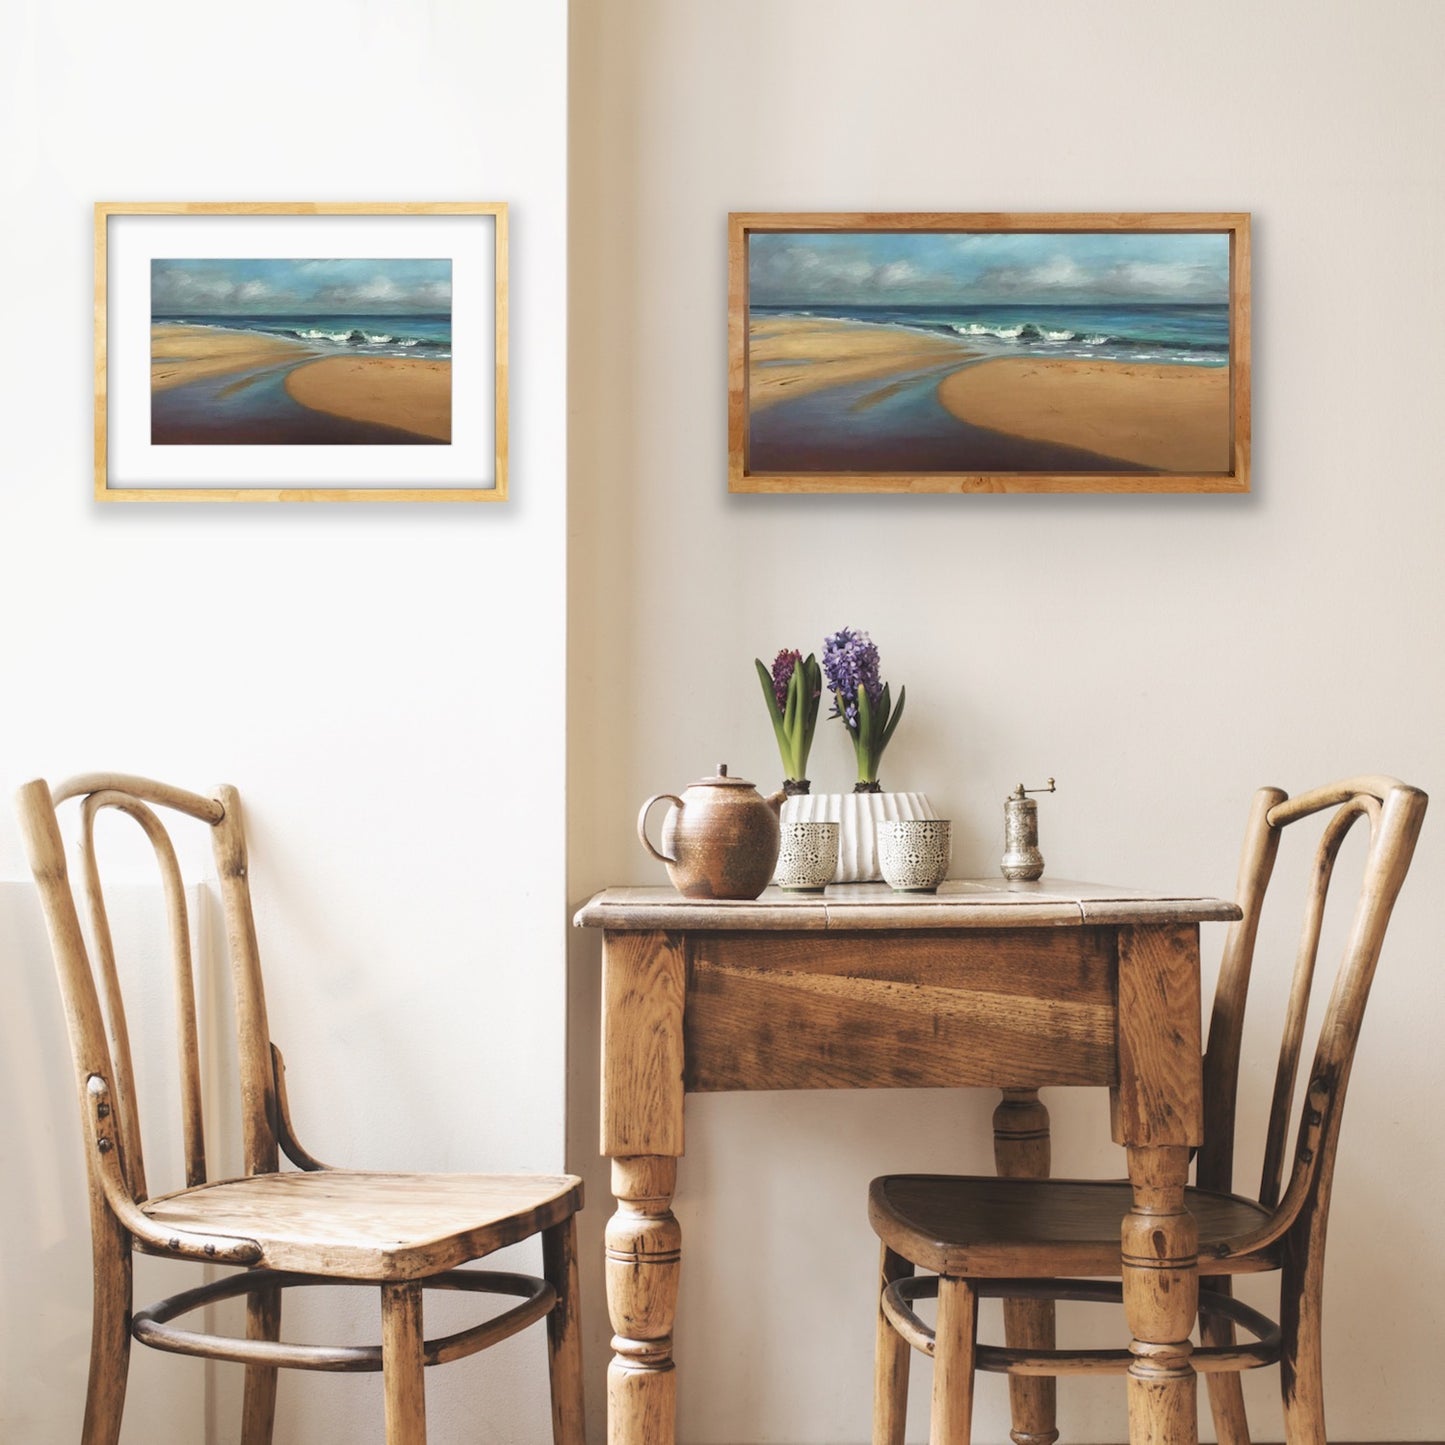 TIDE POOLS - OCEAN PARK BEACH -  Giclee Reproduction of Original Pastel Painting Print